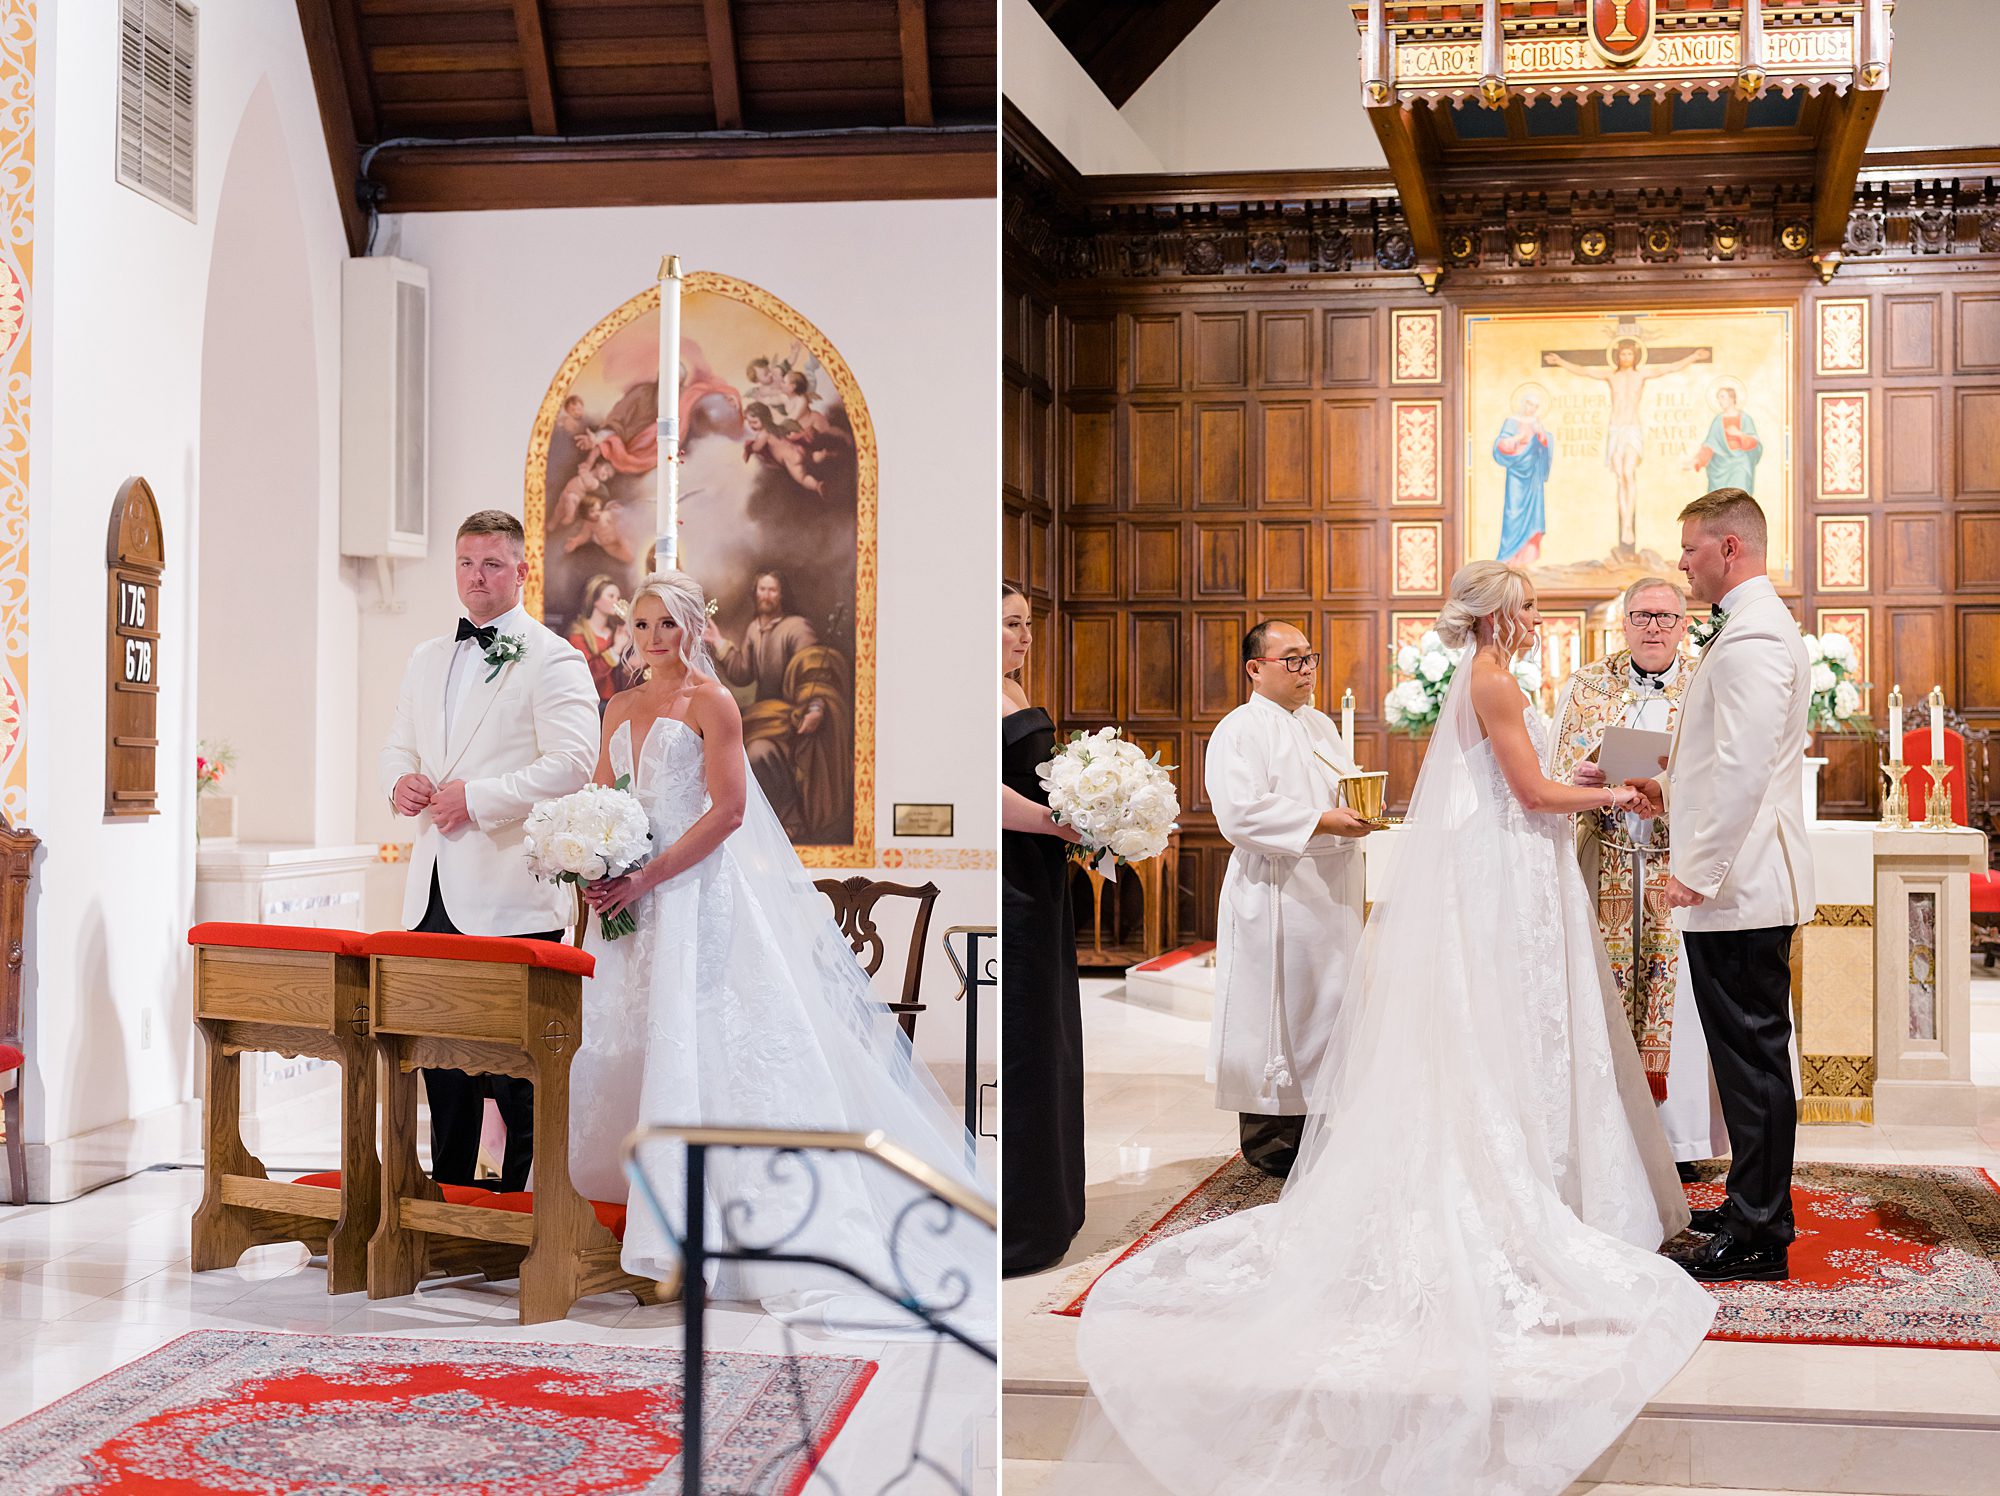 PA church wedding ceremony